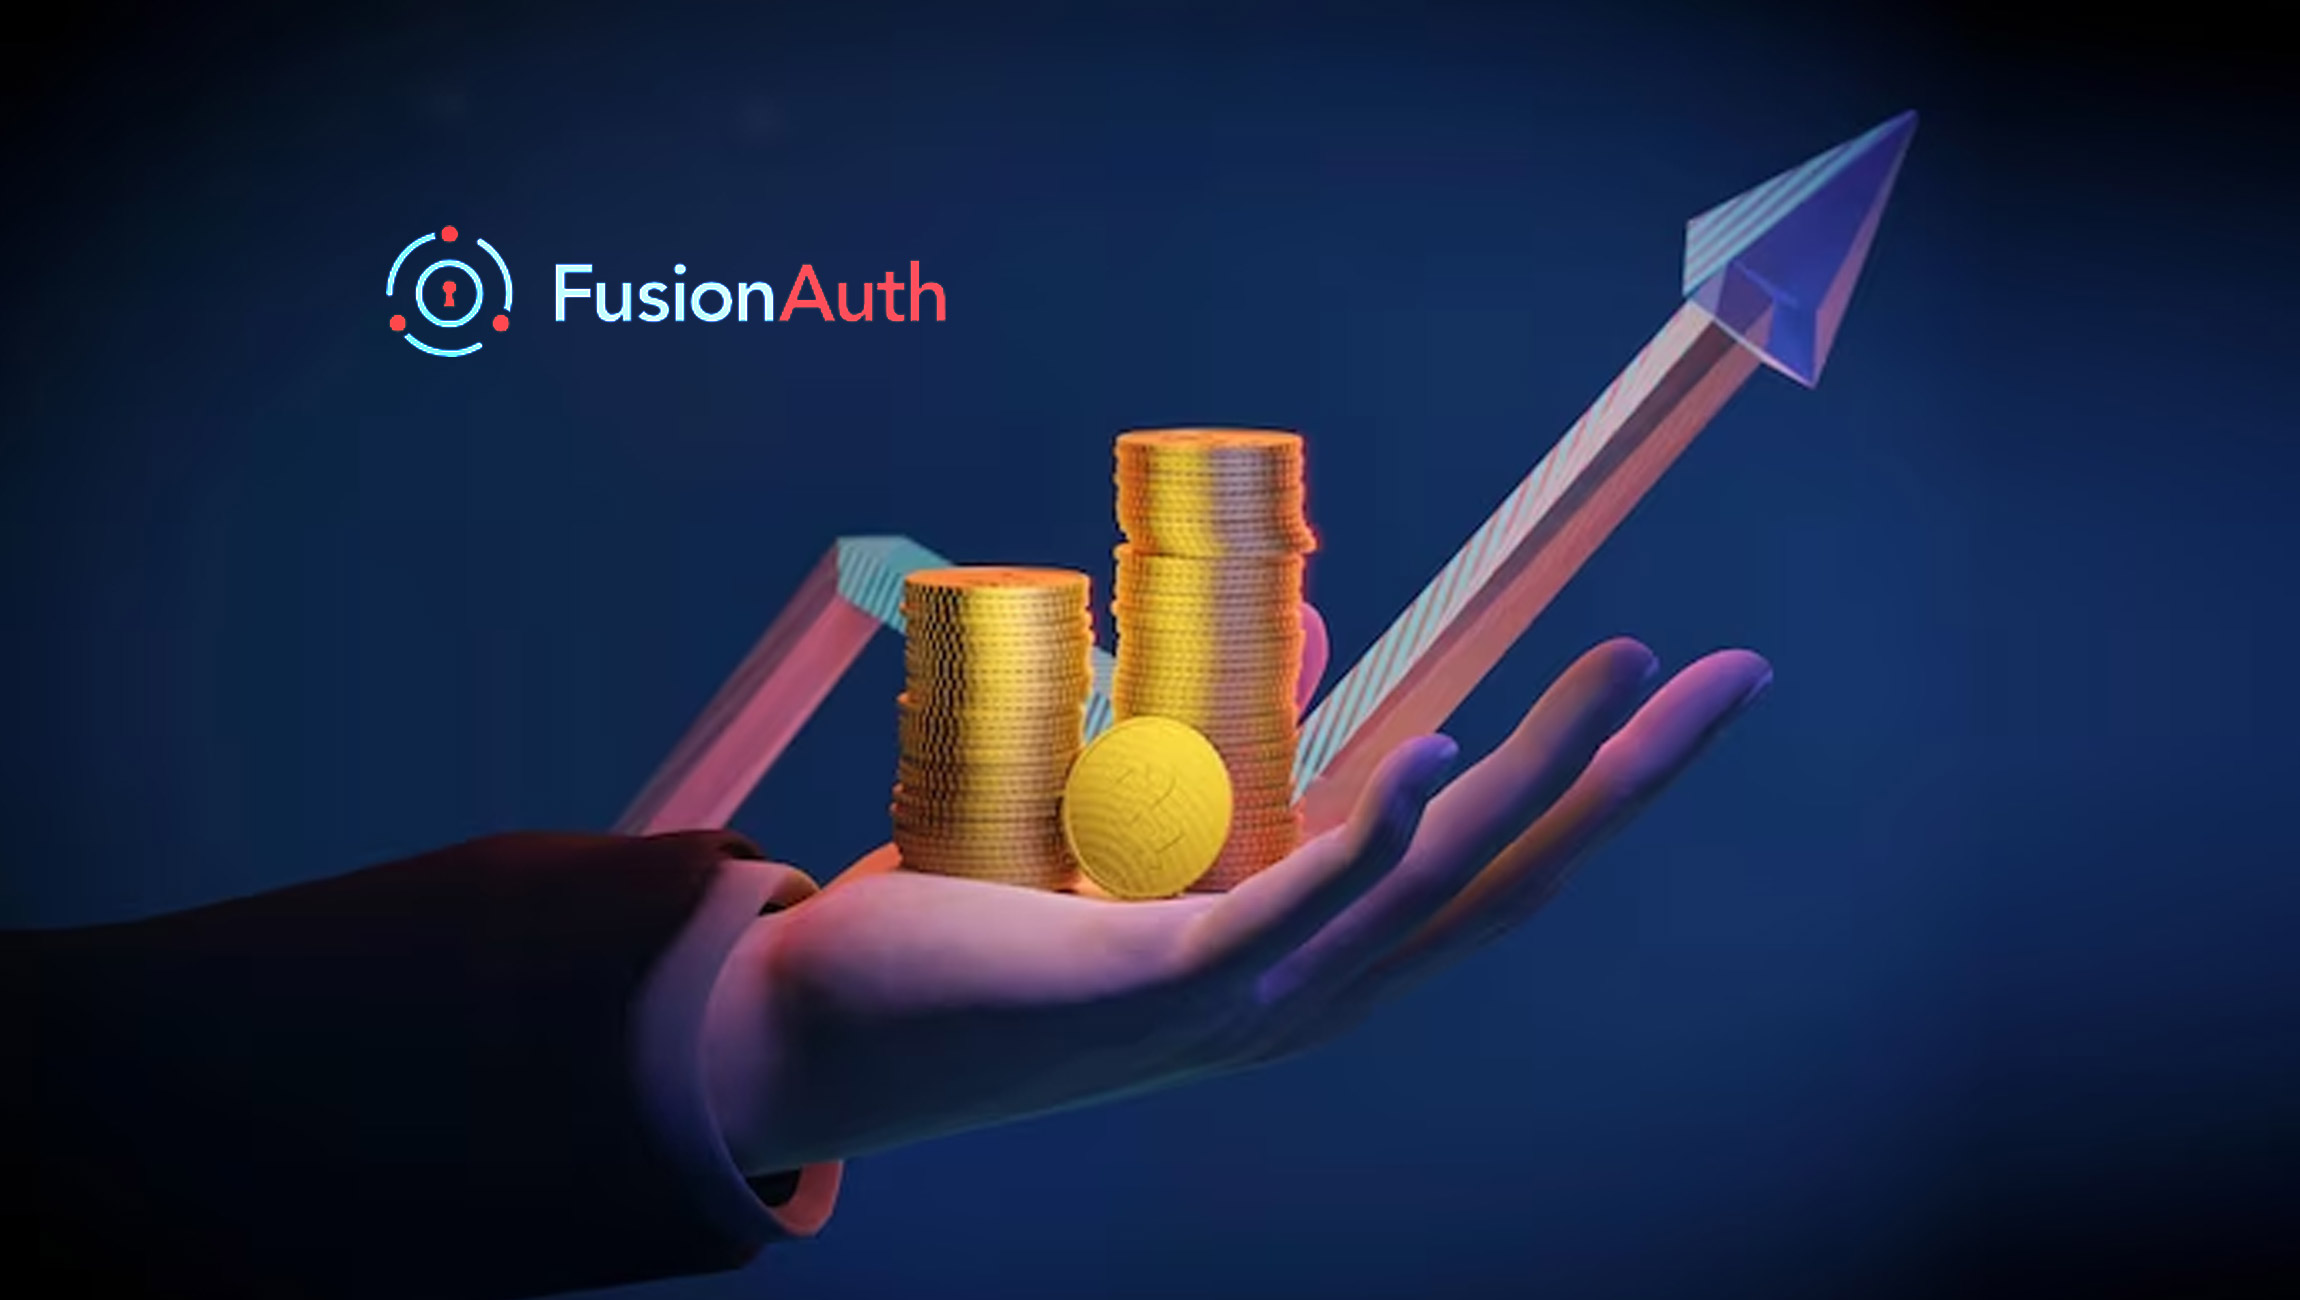 Gaming & Entertainment - FusionAuth